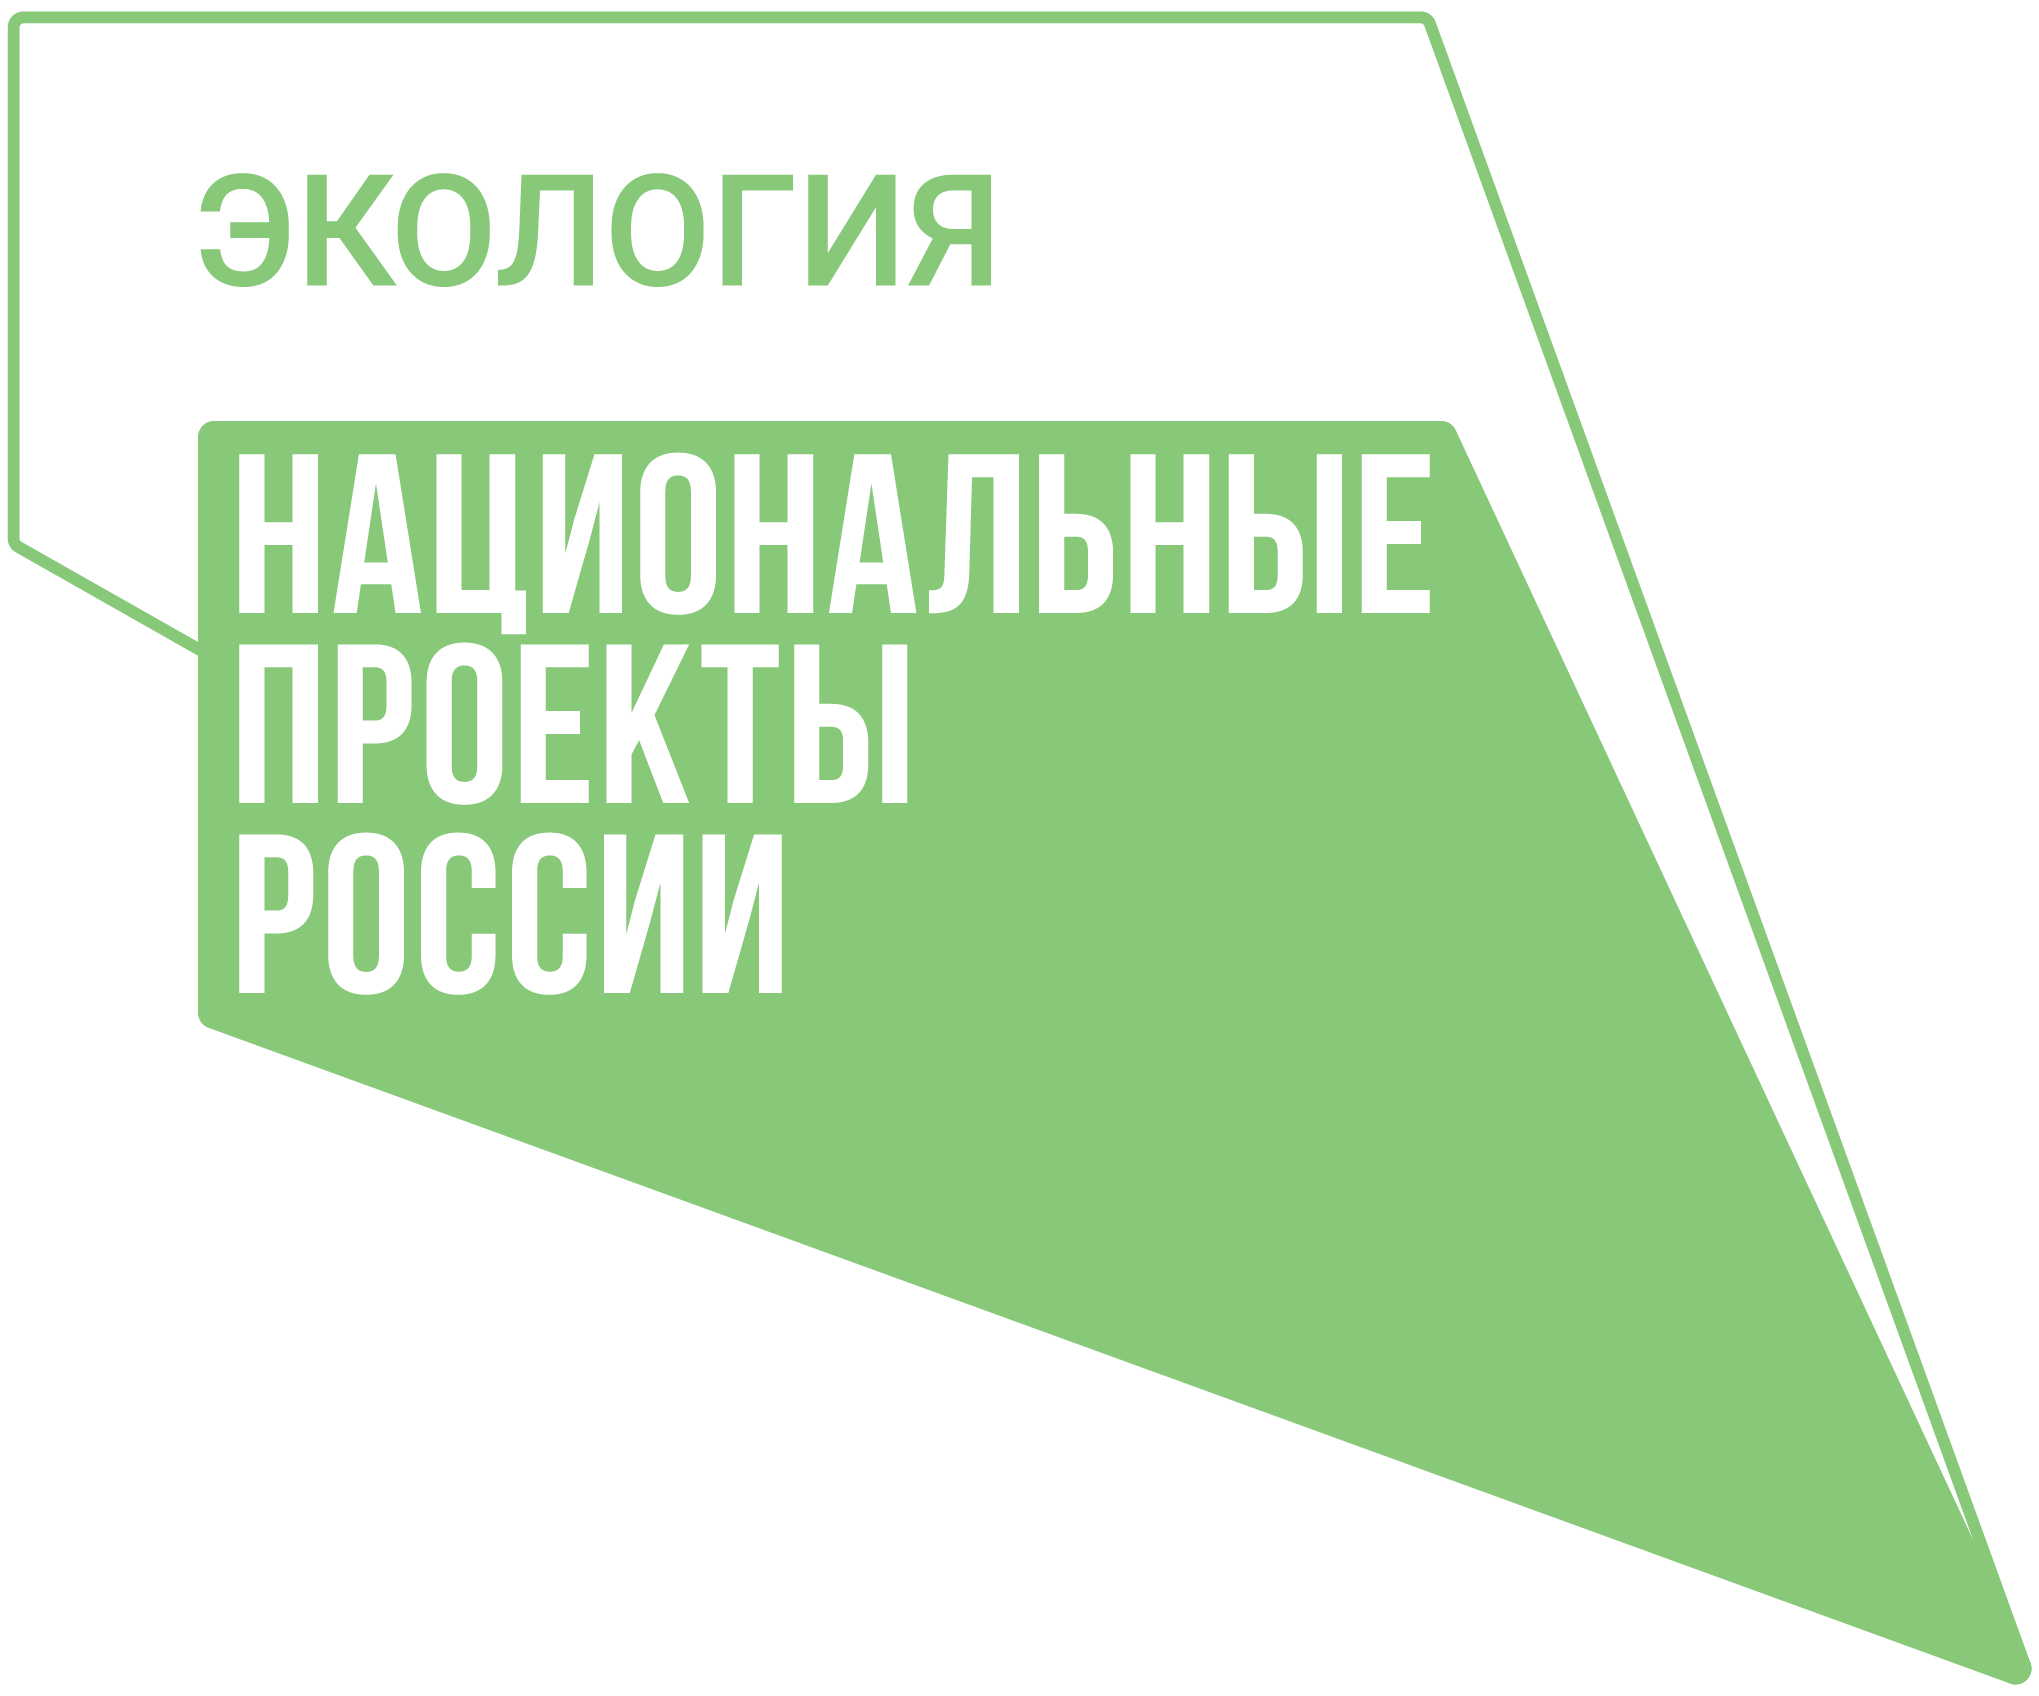 You are currently viewing Всероссийская акция по сбору макулатуры #БумБатл